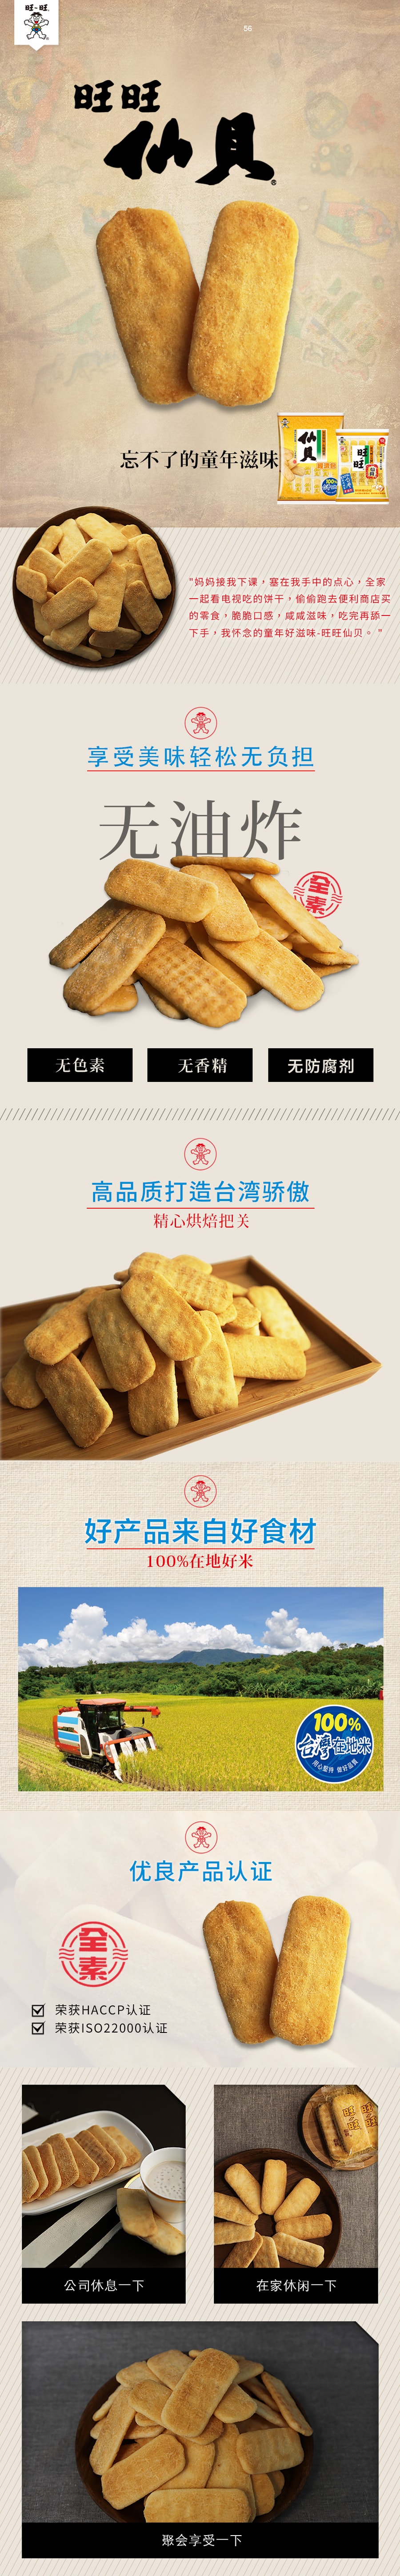 Taiwan Rice Cracker Senbei - Share Pack【Vegan】350g*2 Packs 700g